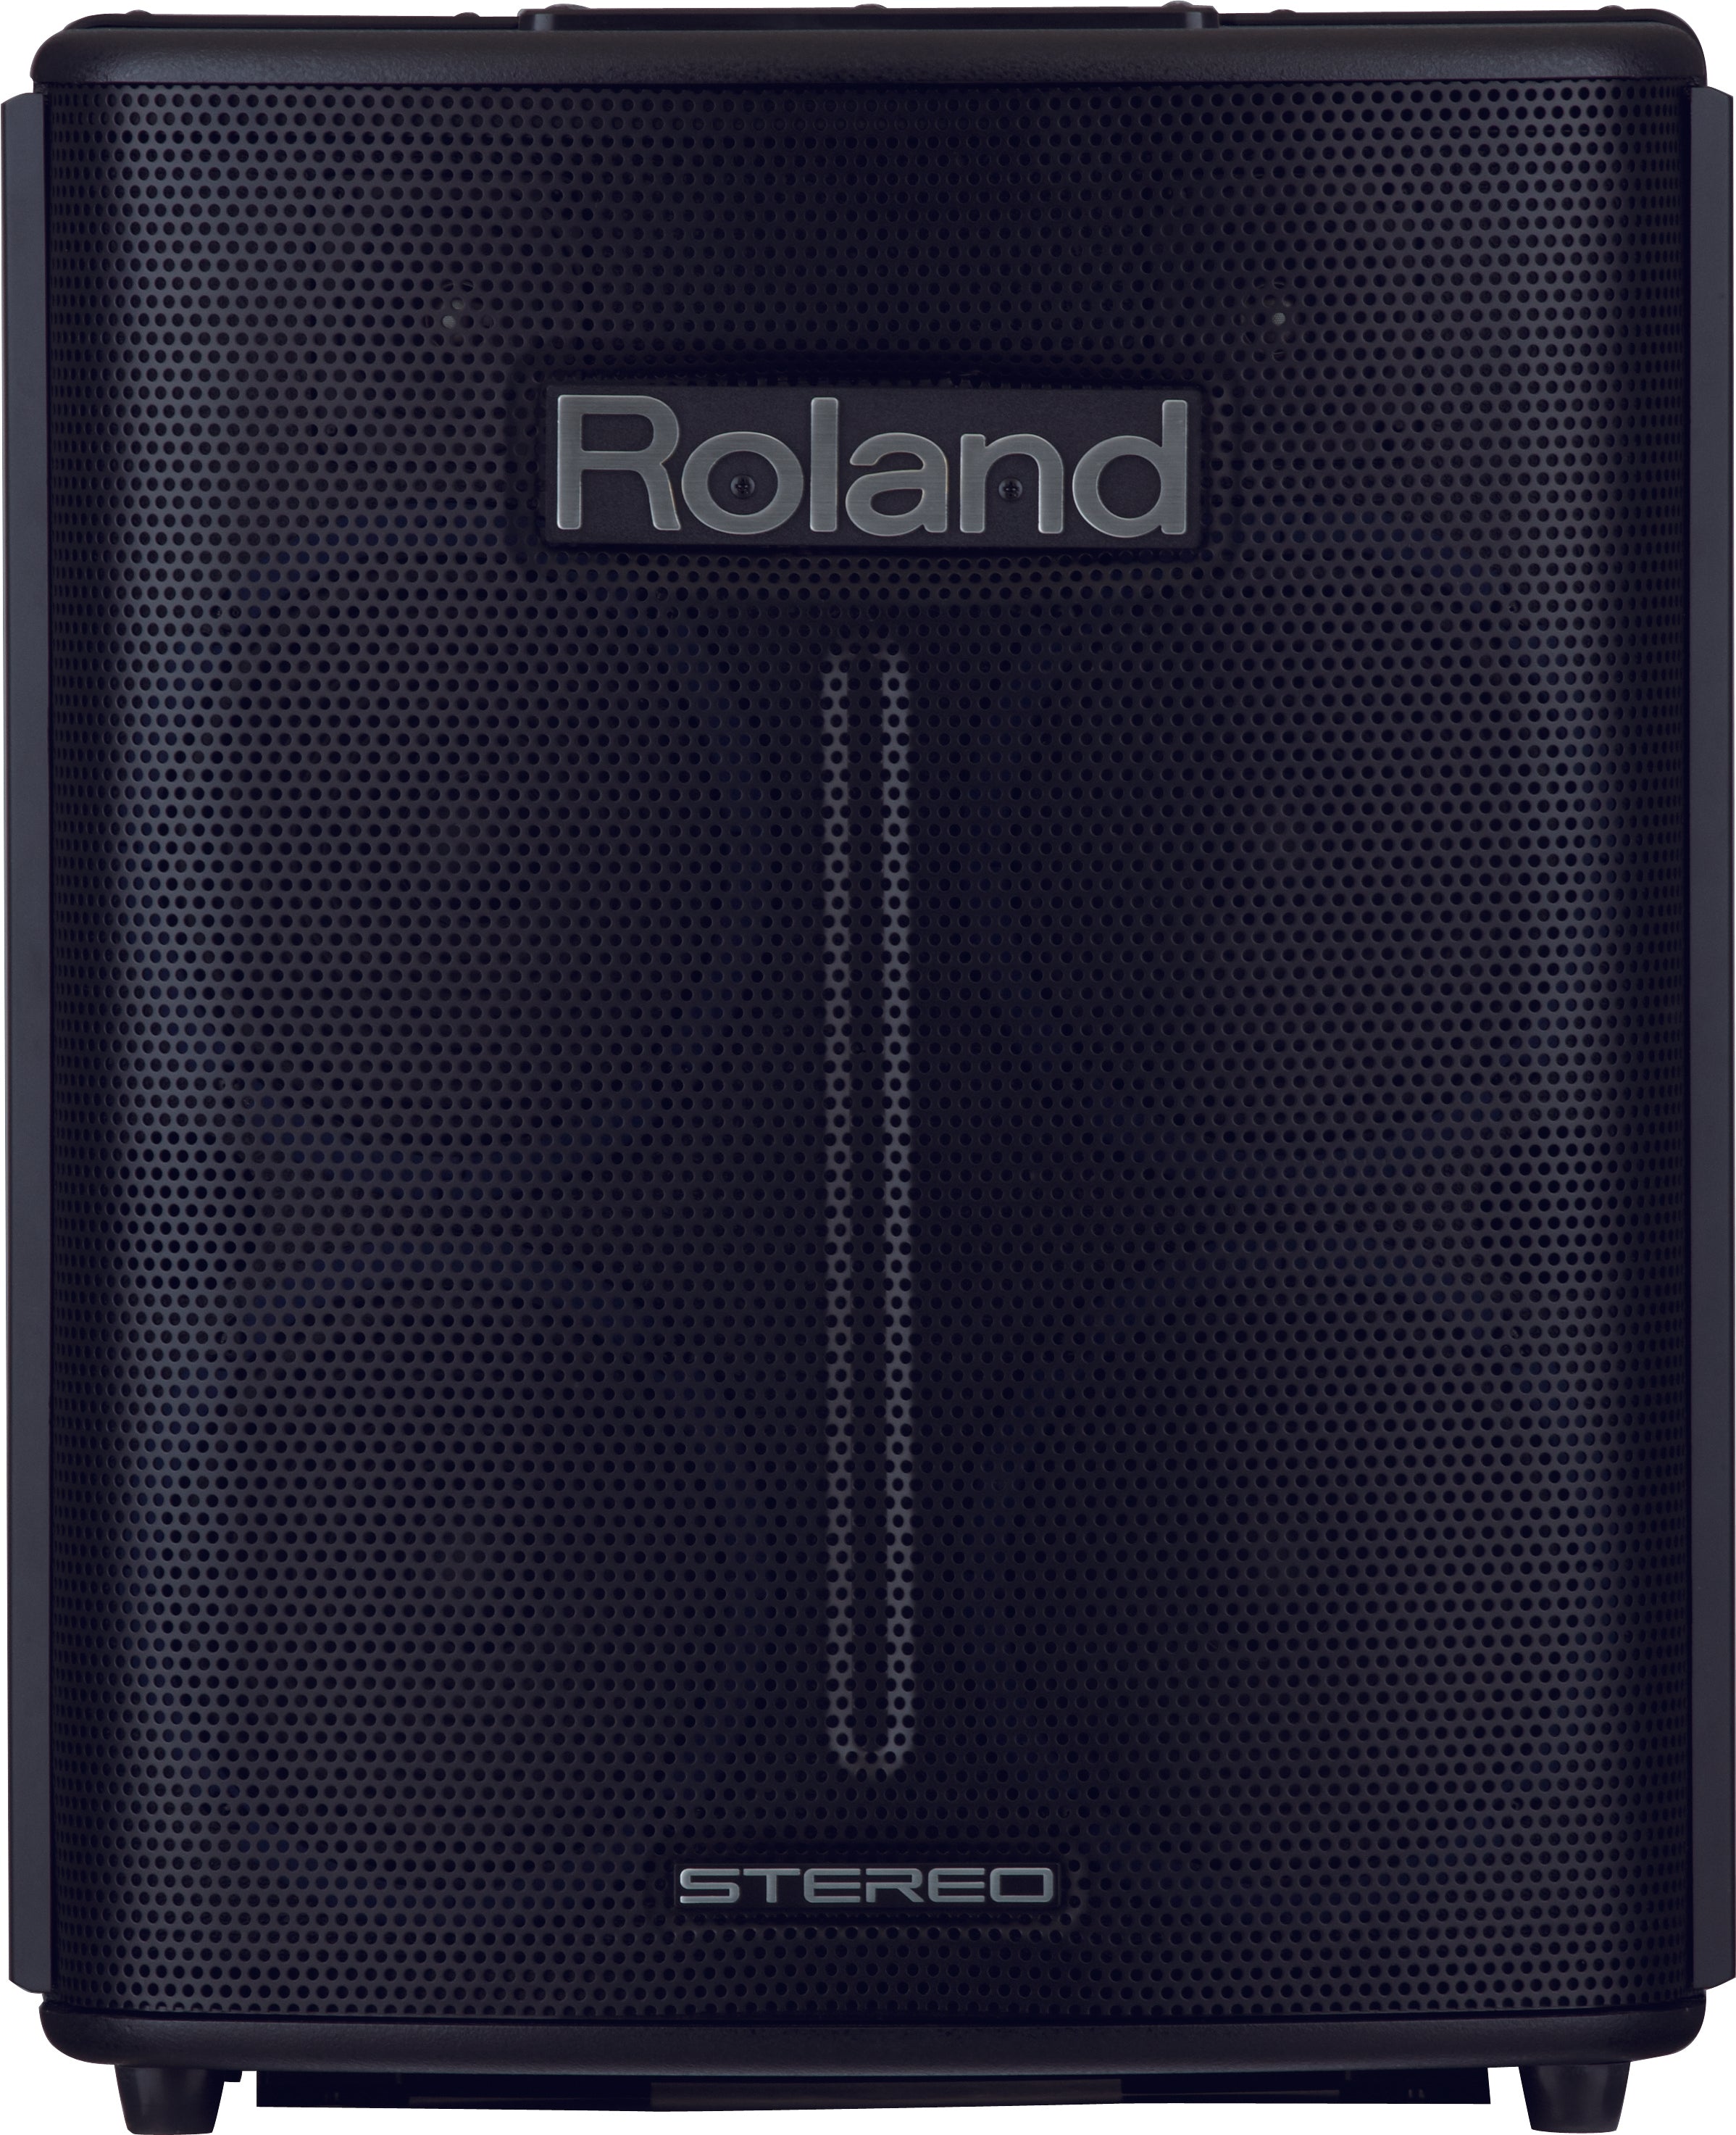 Roland BA330 - Hollywood DJ